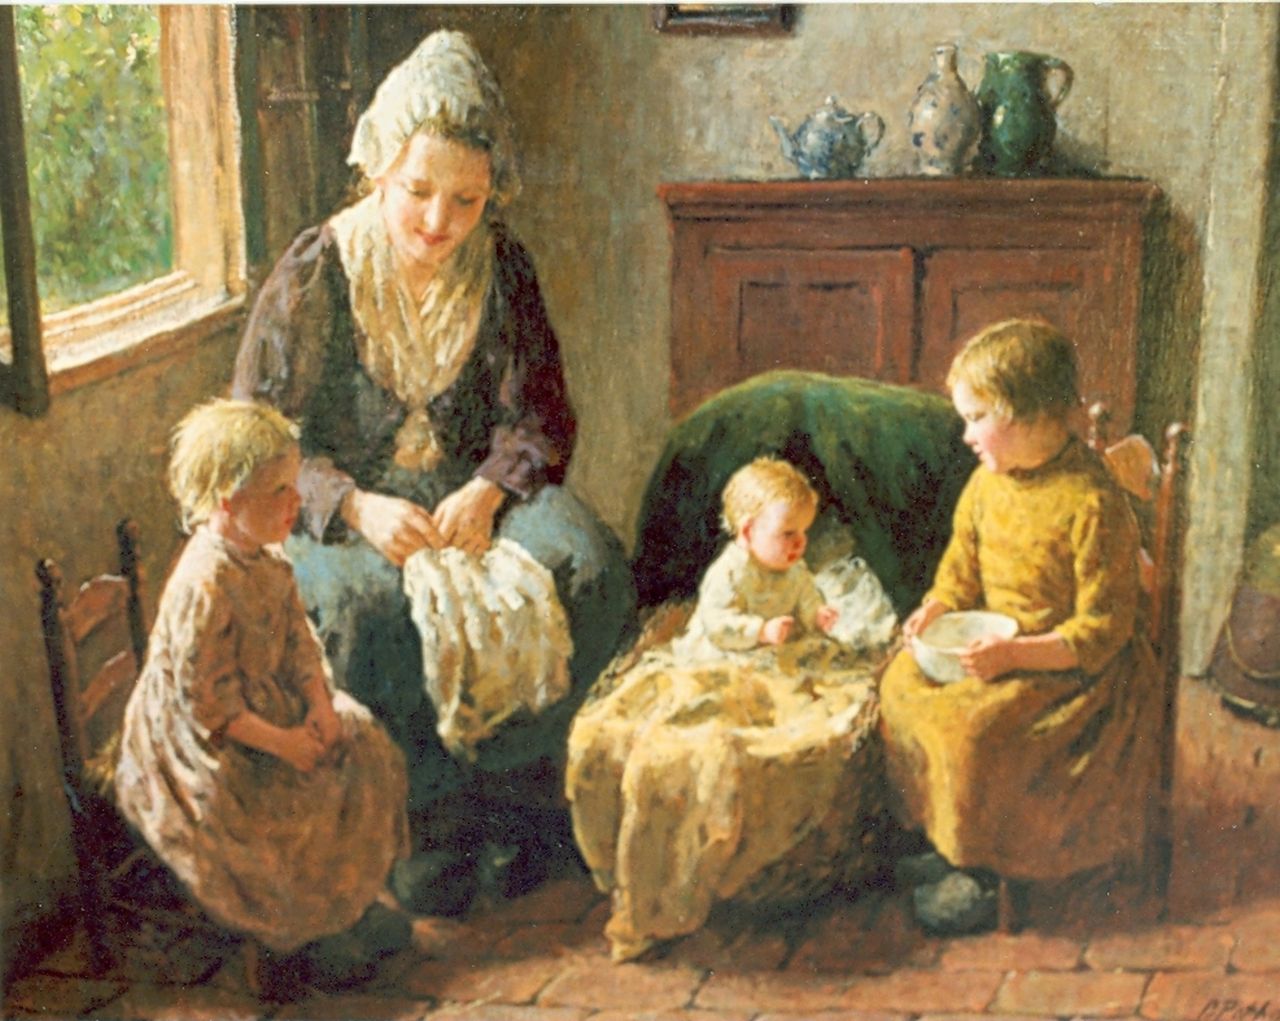 Pothast B.J.C.  | 'Bernard' Jean Corneille Pothast, Feeding the baby, oil on canvas 48.5 x 58.5 cm, signed l.r.